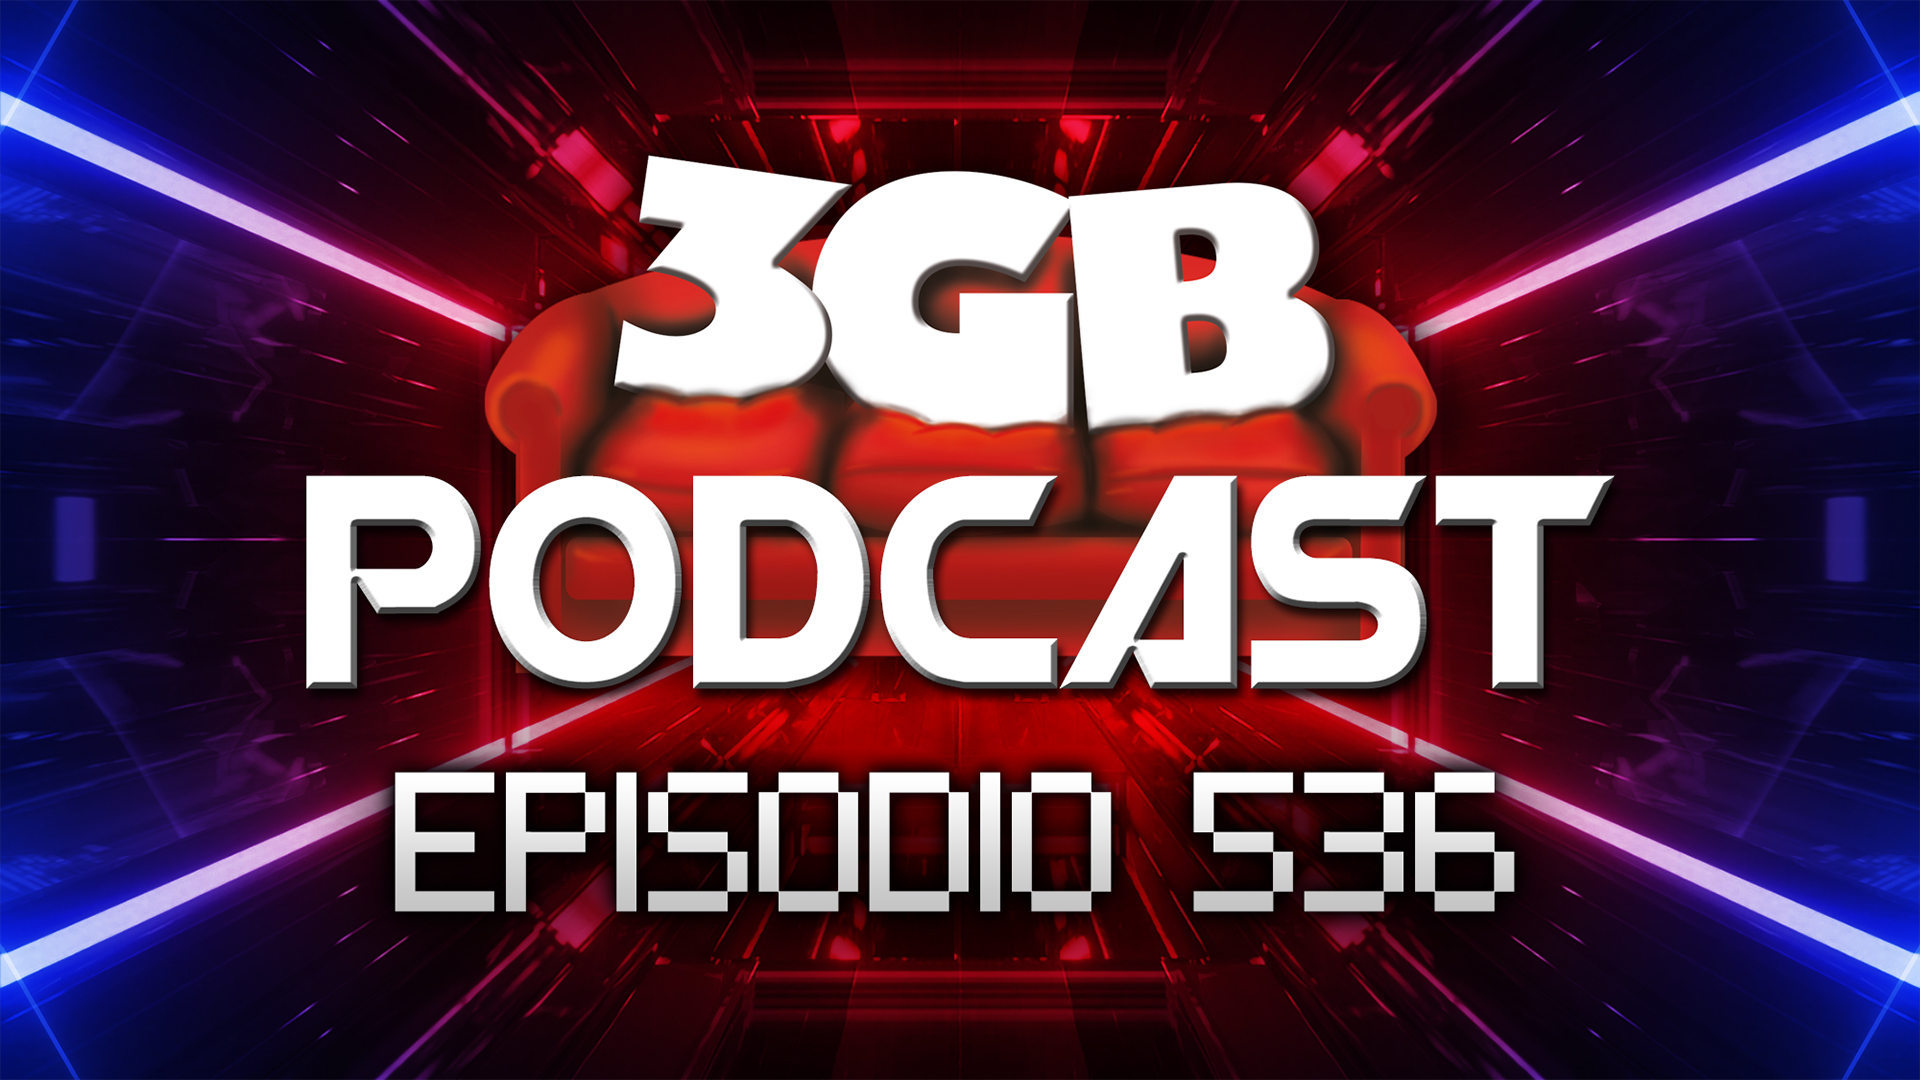 Podcast: Episodio 536, Podcast Triste 2.0